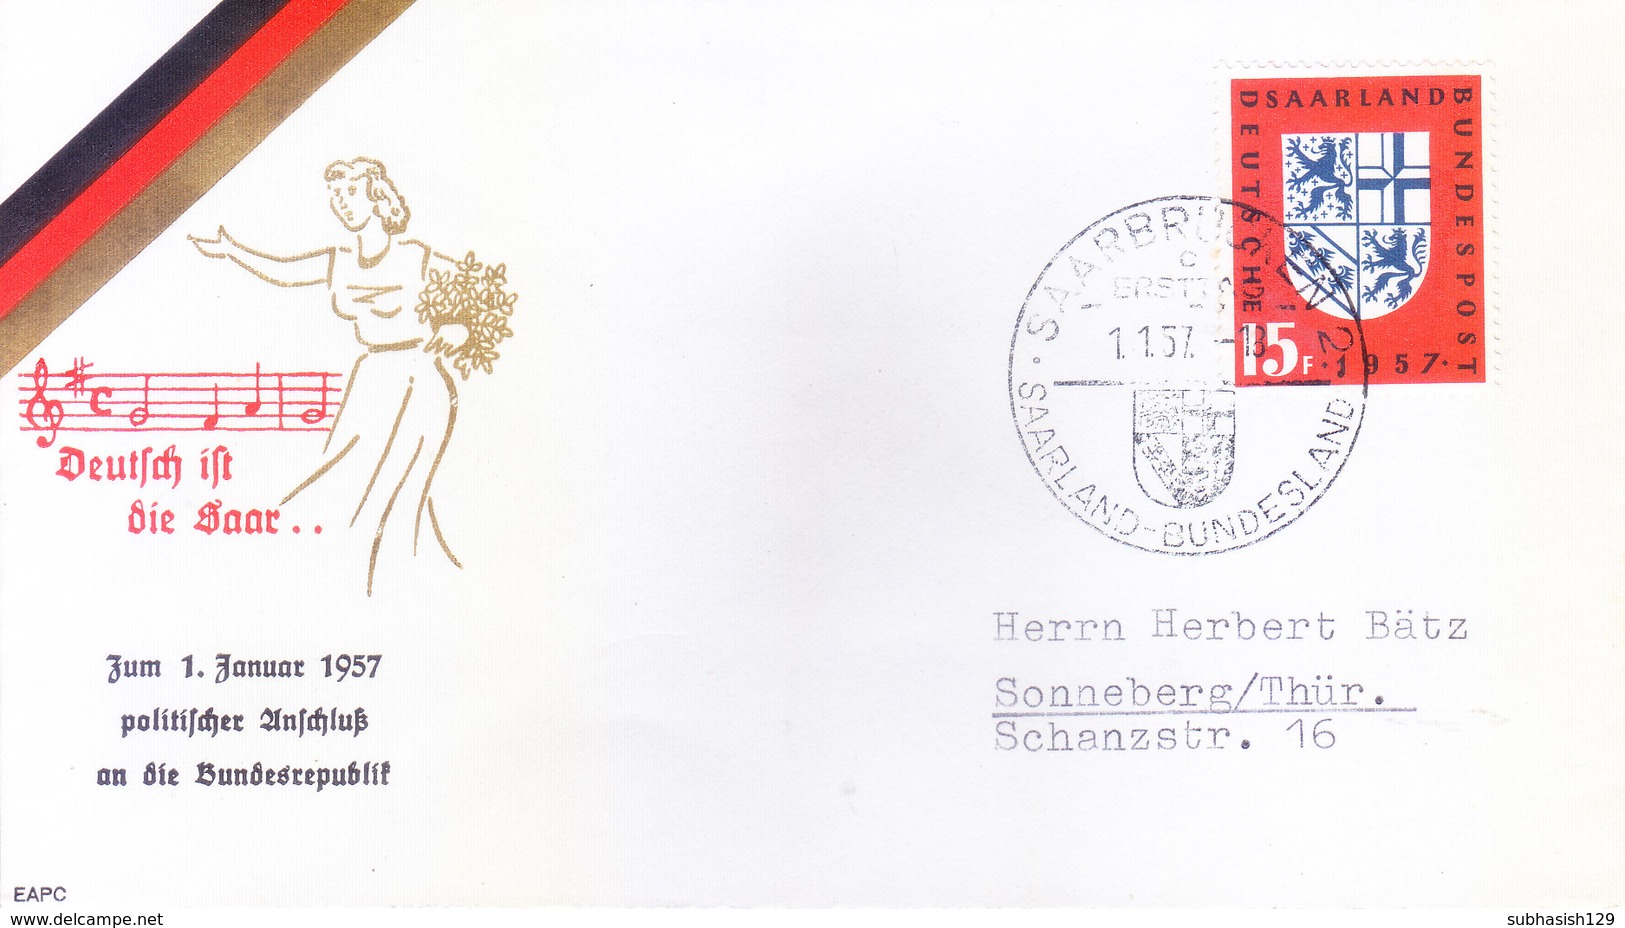 GERMANY, FEDERAL REPUBLIC : FIRST DAY COVER, 01.01.1957 : SAARLAND : DEUTFDJ IFT DIE SAAR.... , - Covers & Documents